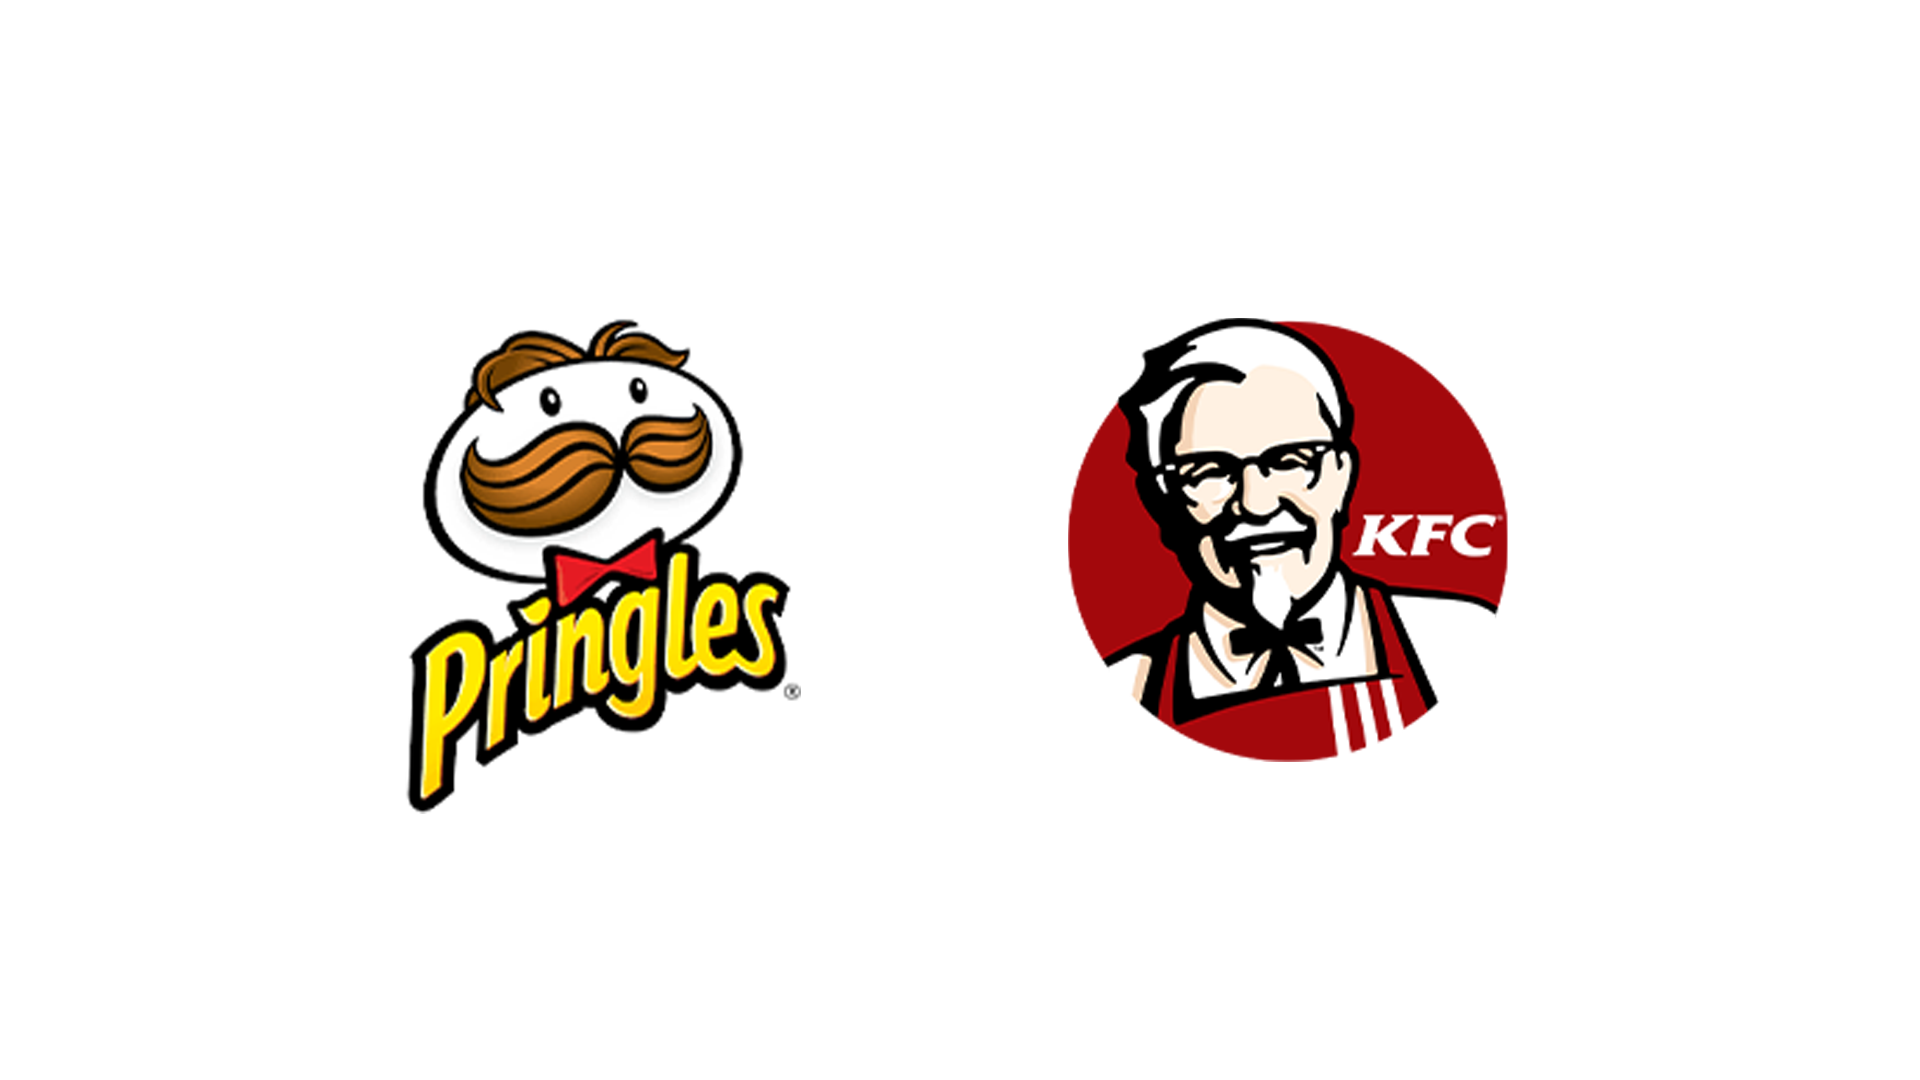 The logos of Pringles and KFC